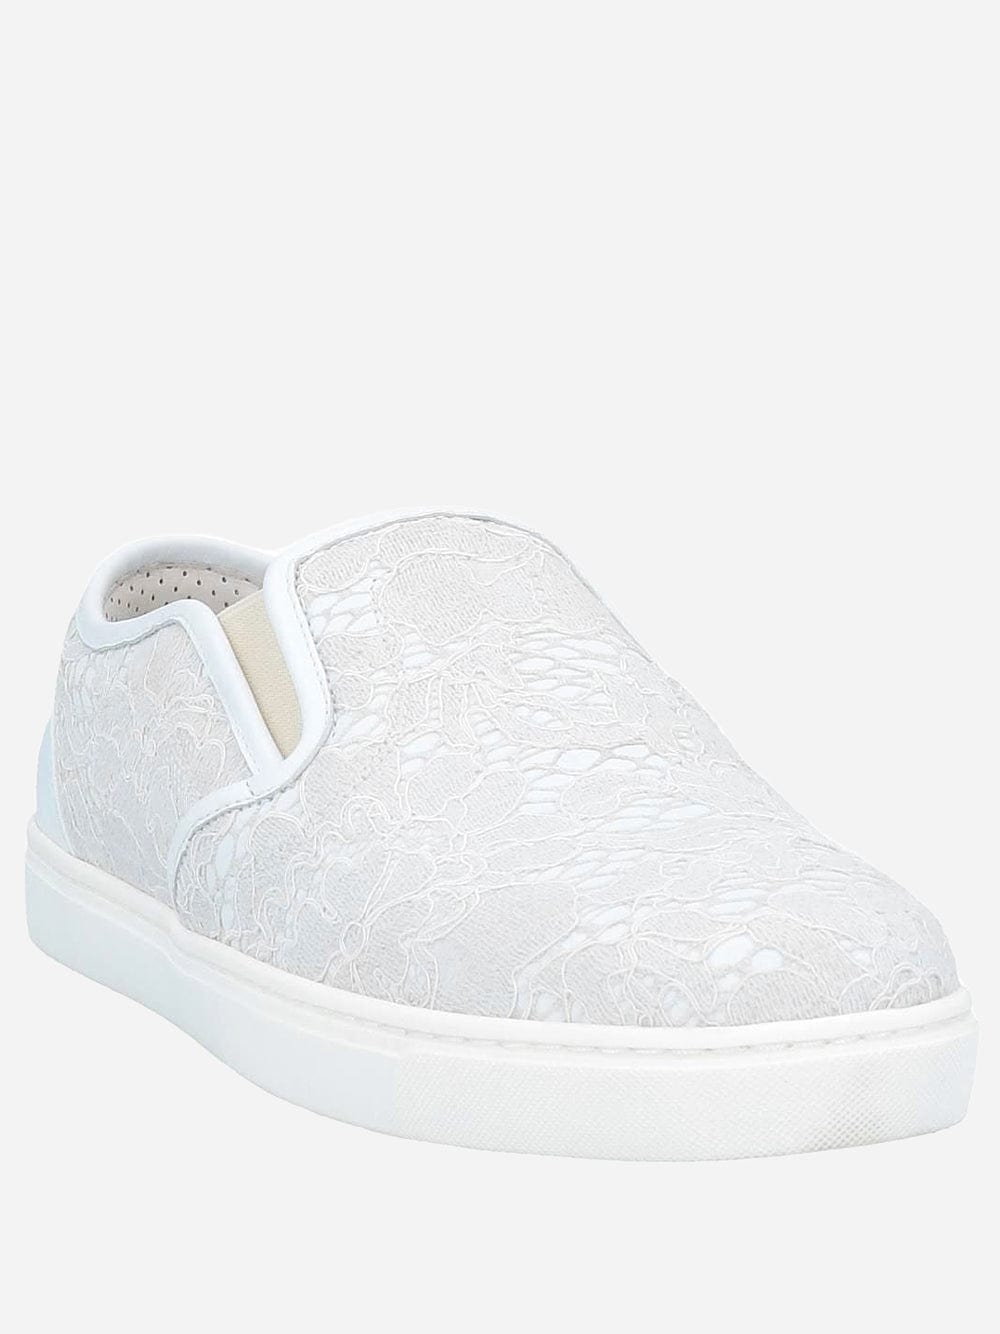 Dolce & Gabbana Dolce & Gabbana Lace Slip-On Sneakers